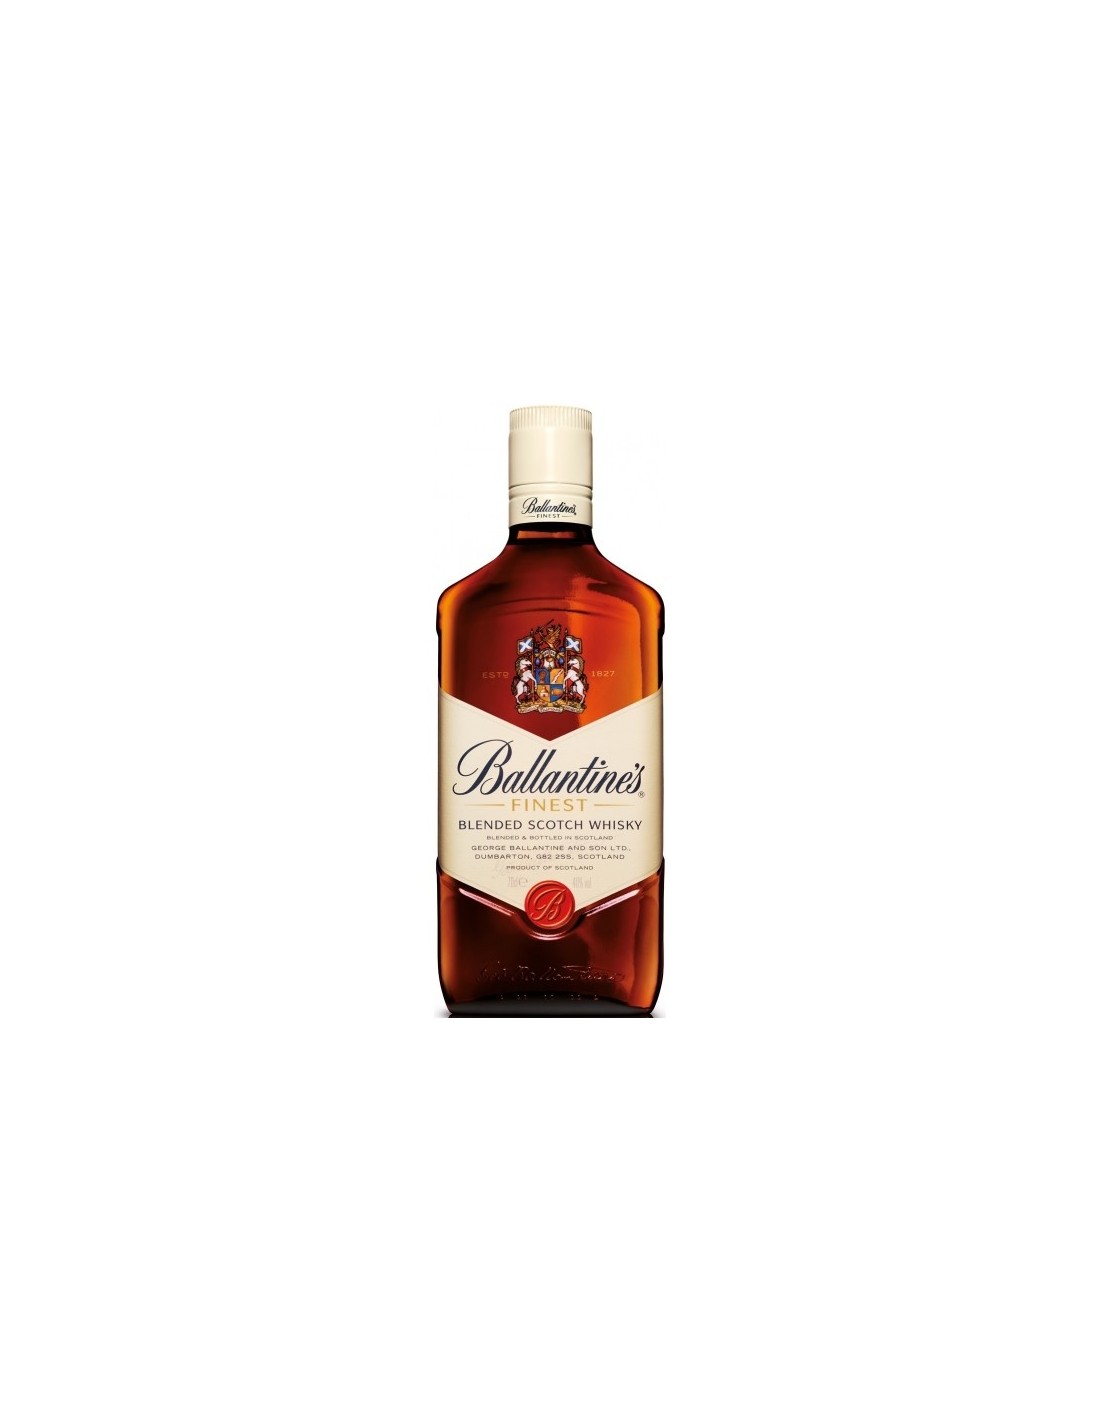 Whisky Ballantine’s Finest, 0.7L, 40% alc., Scotia alcooldiscount.ro